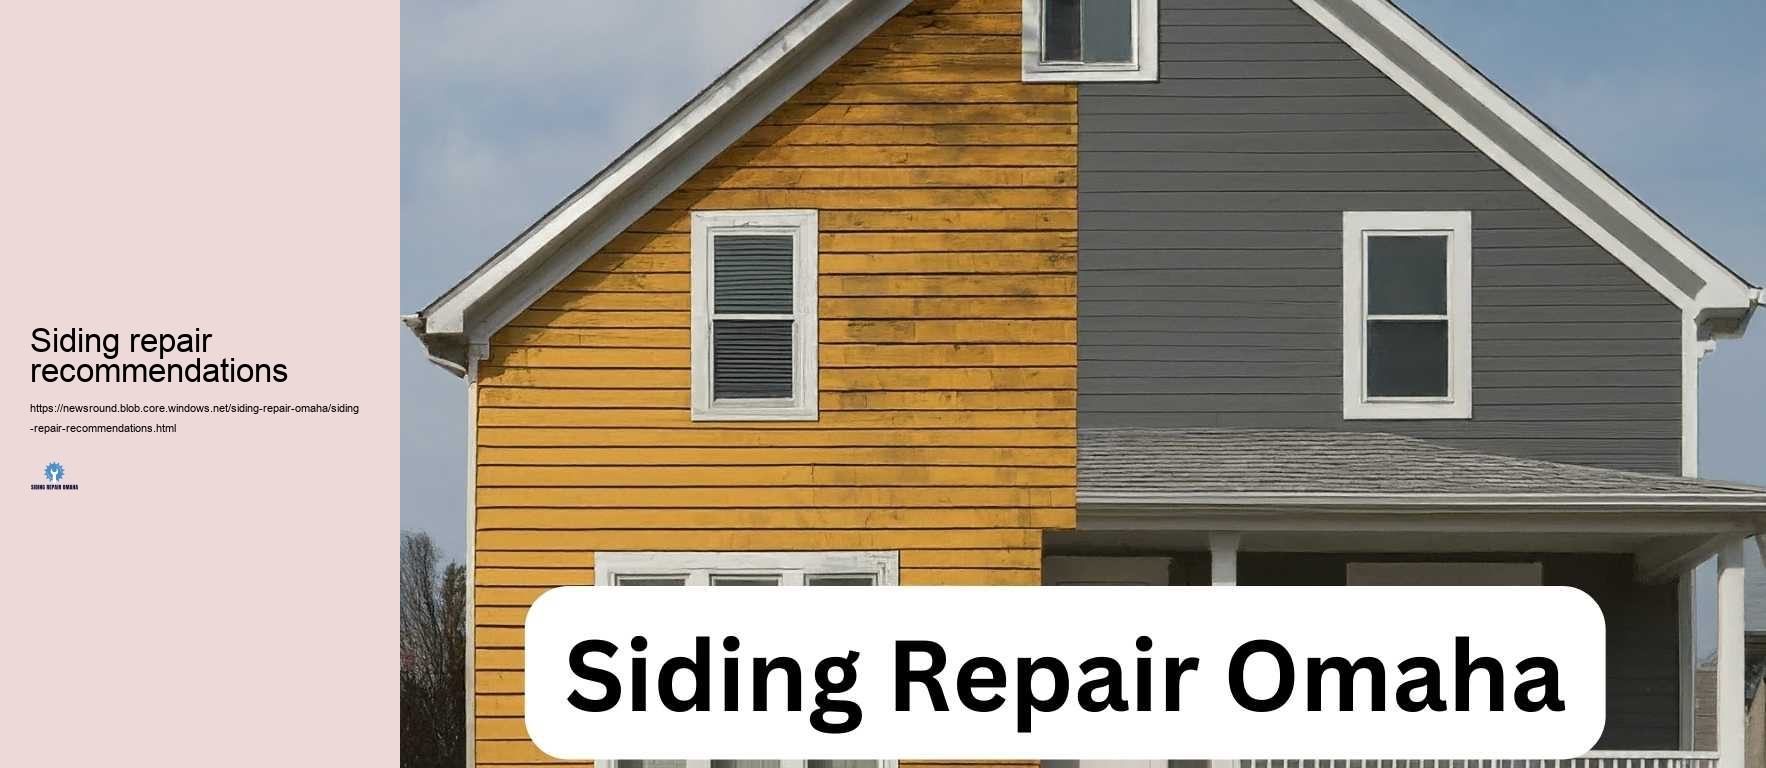 Siding repair recommendations